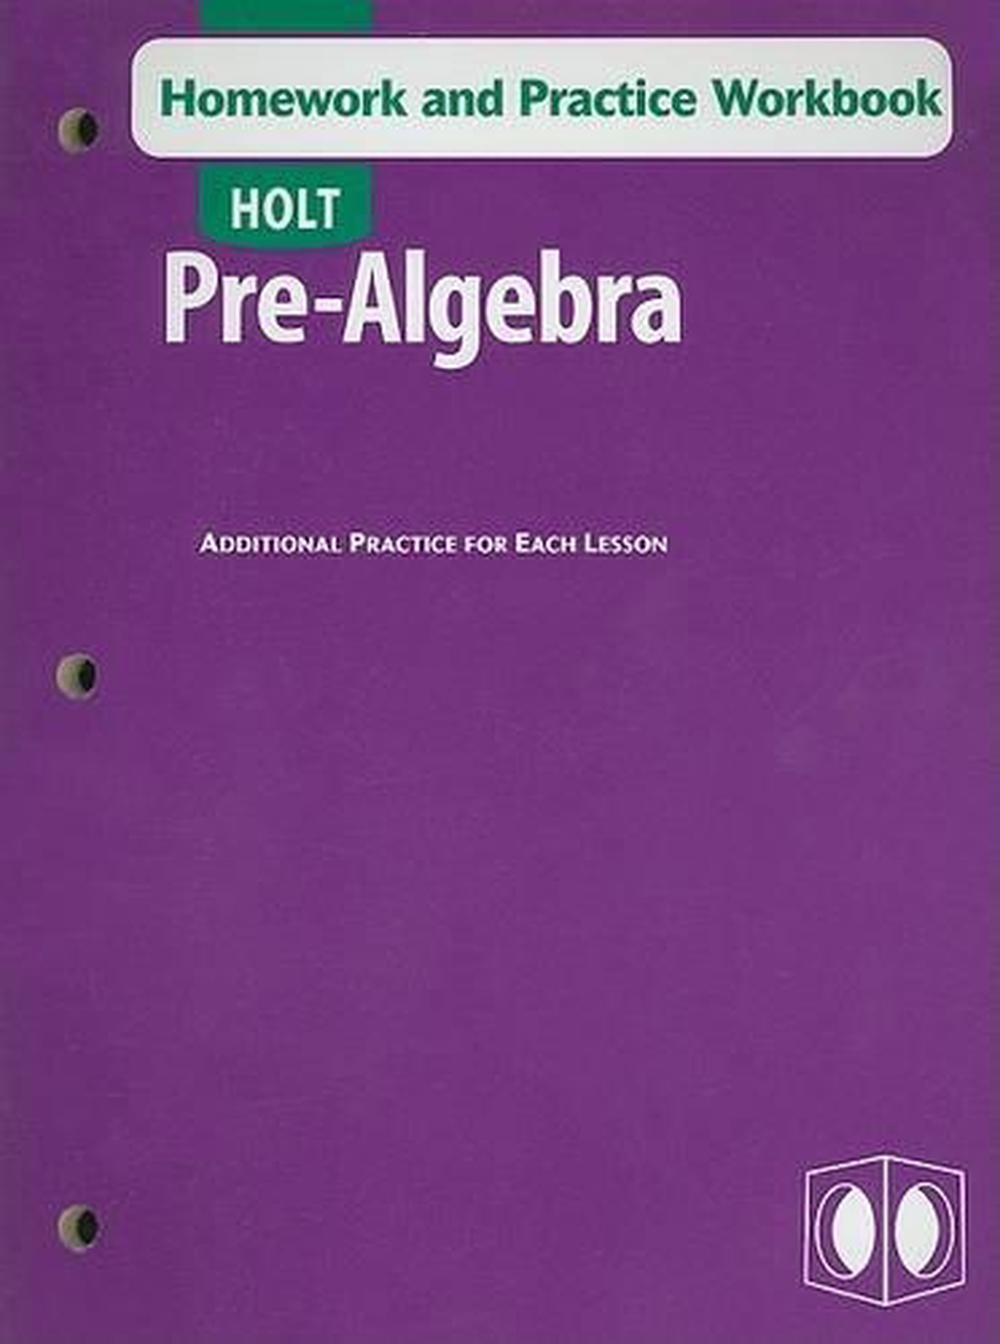 Holt algebra 2 homework help